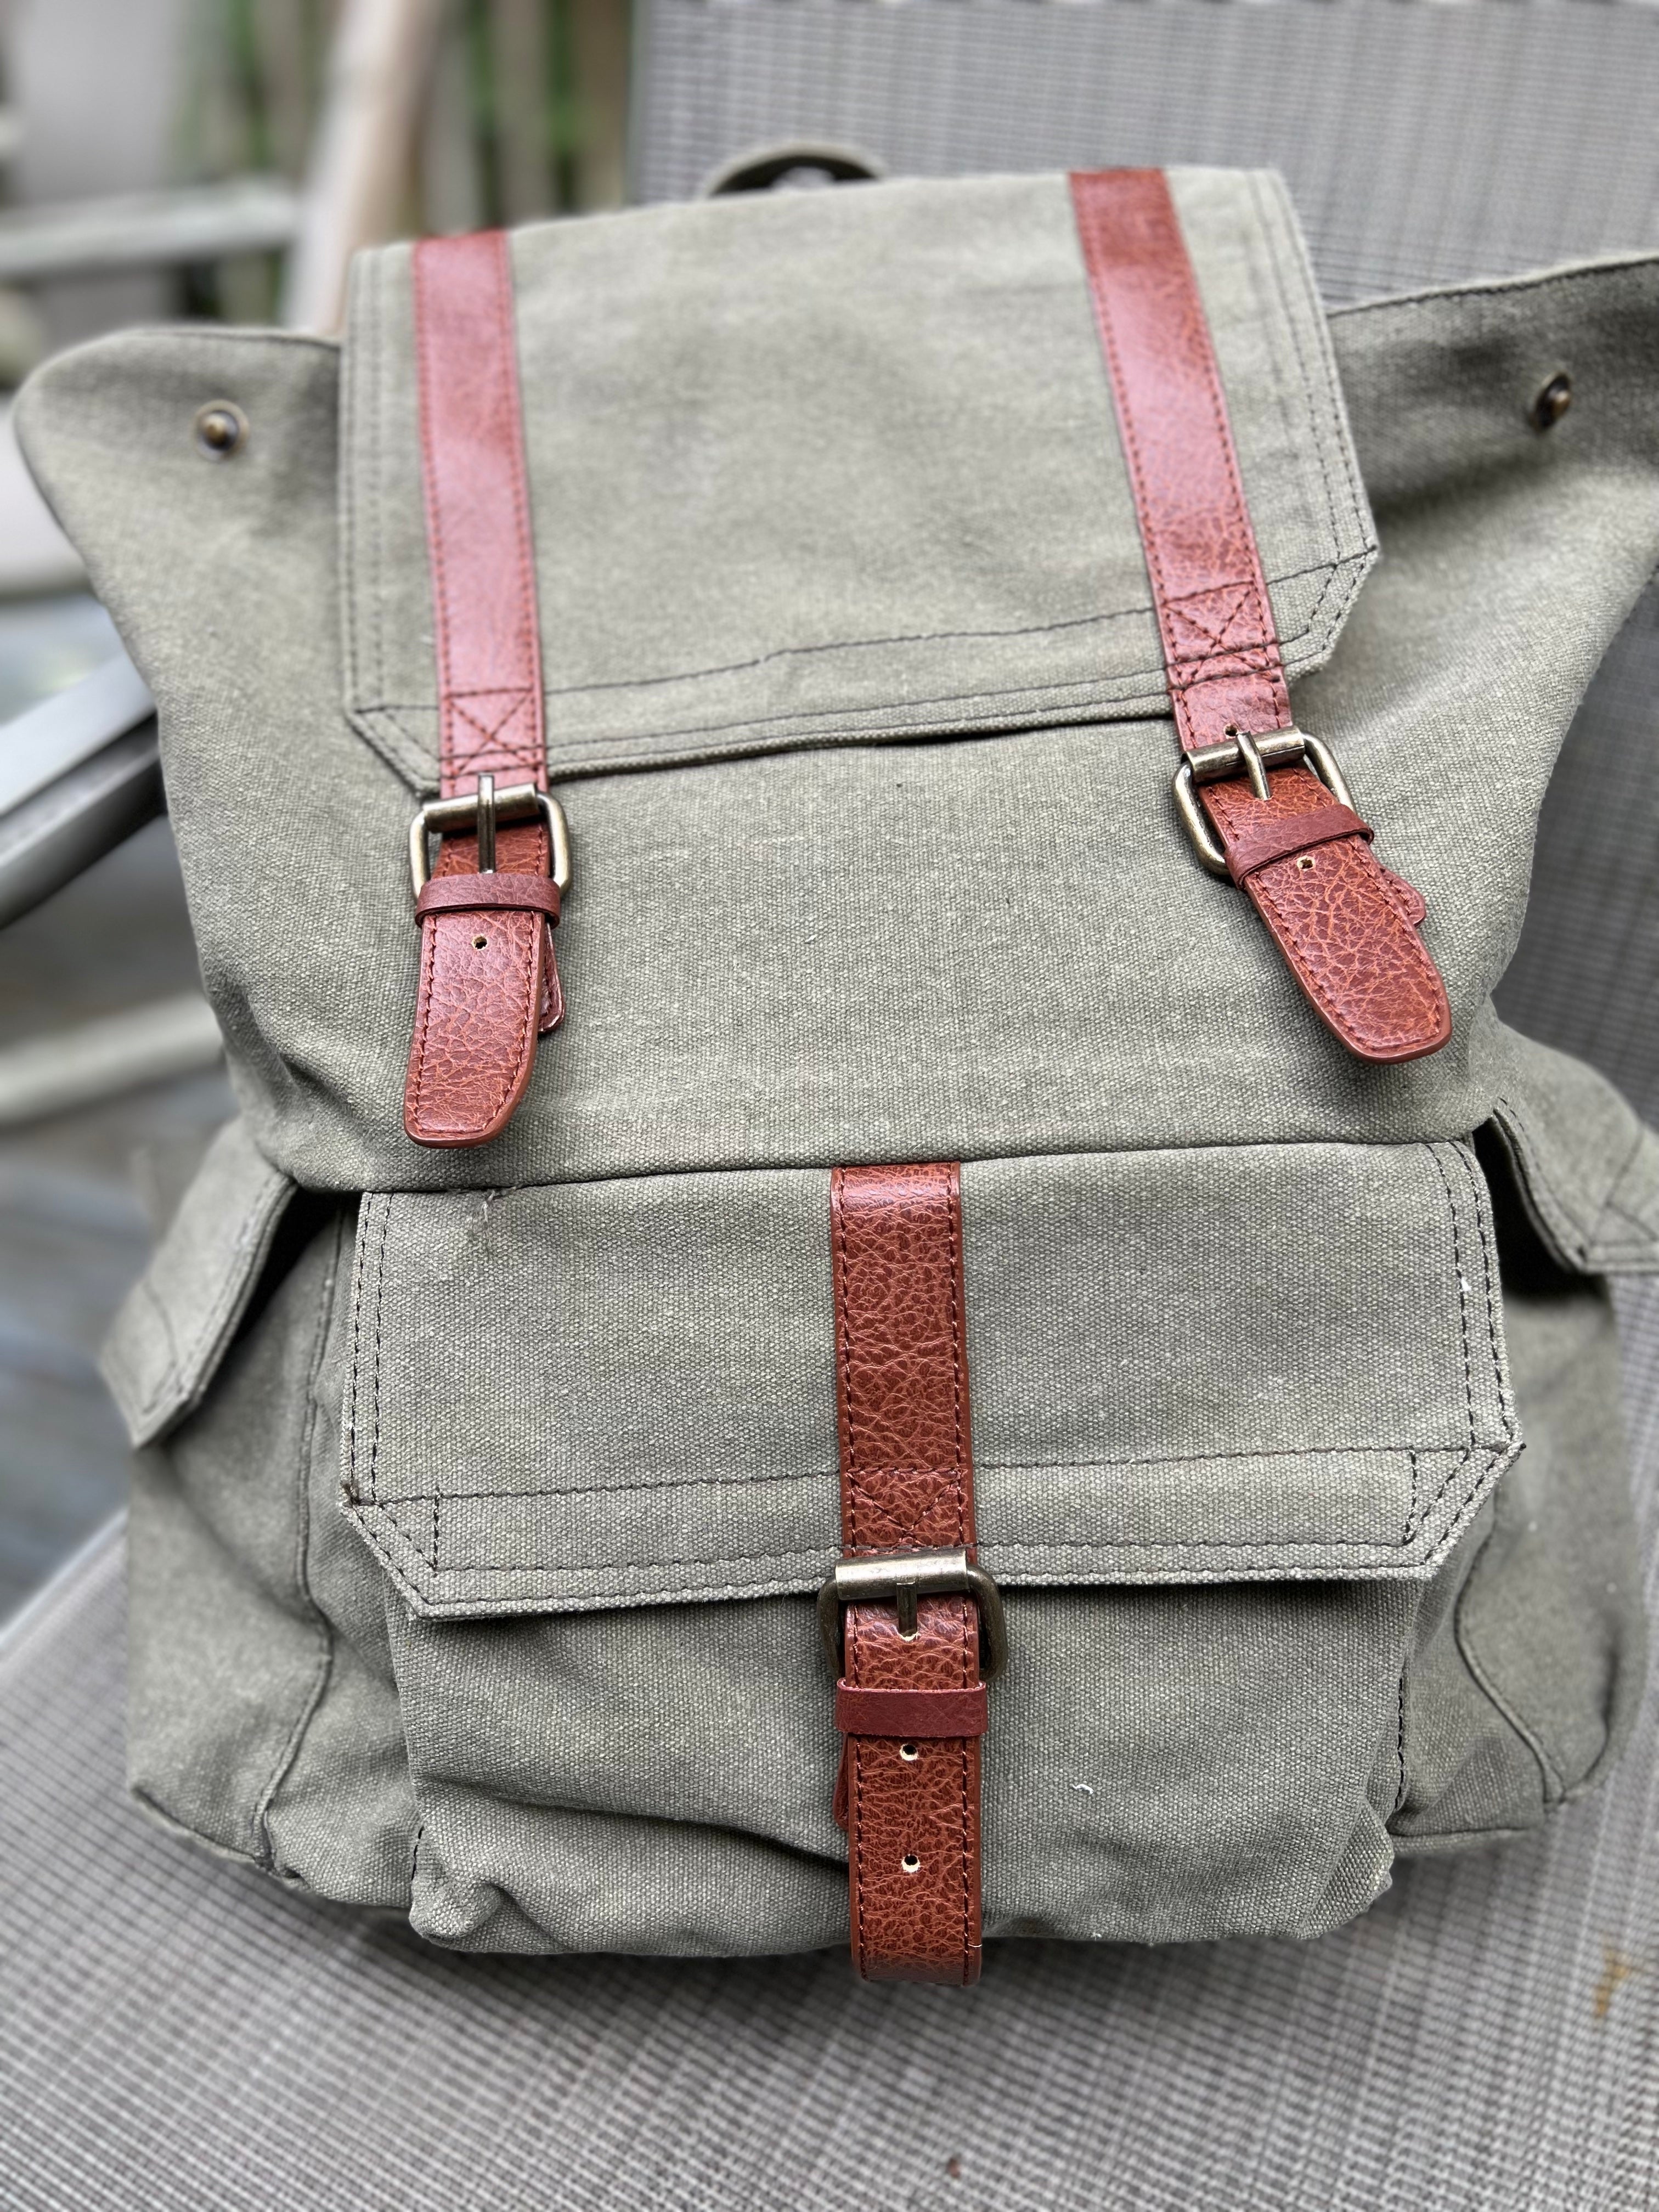 Rugged Bag 2.1 - ROAM Adventure Co.